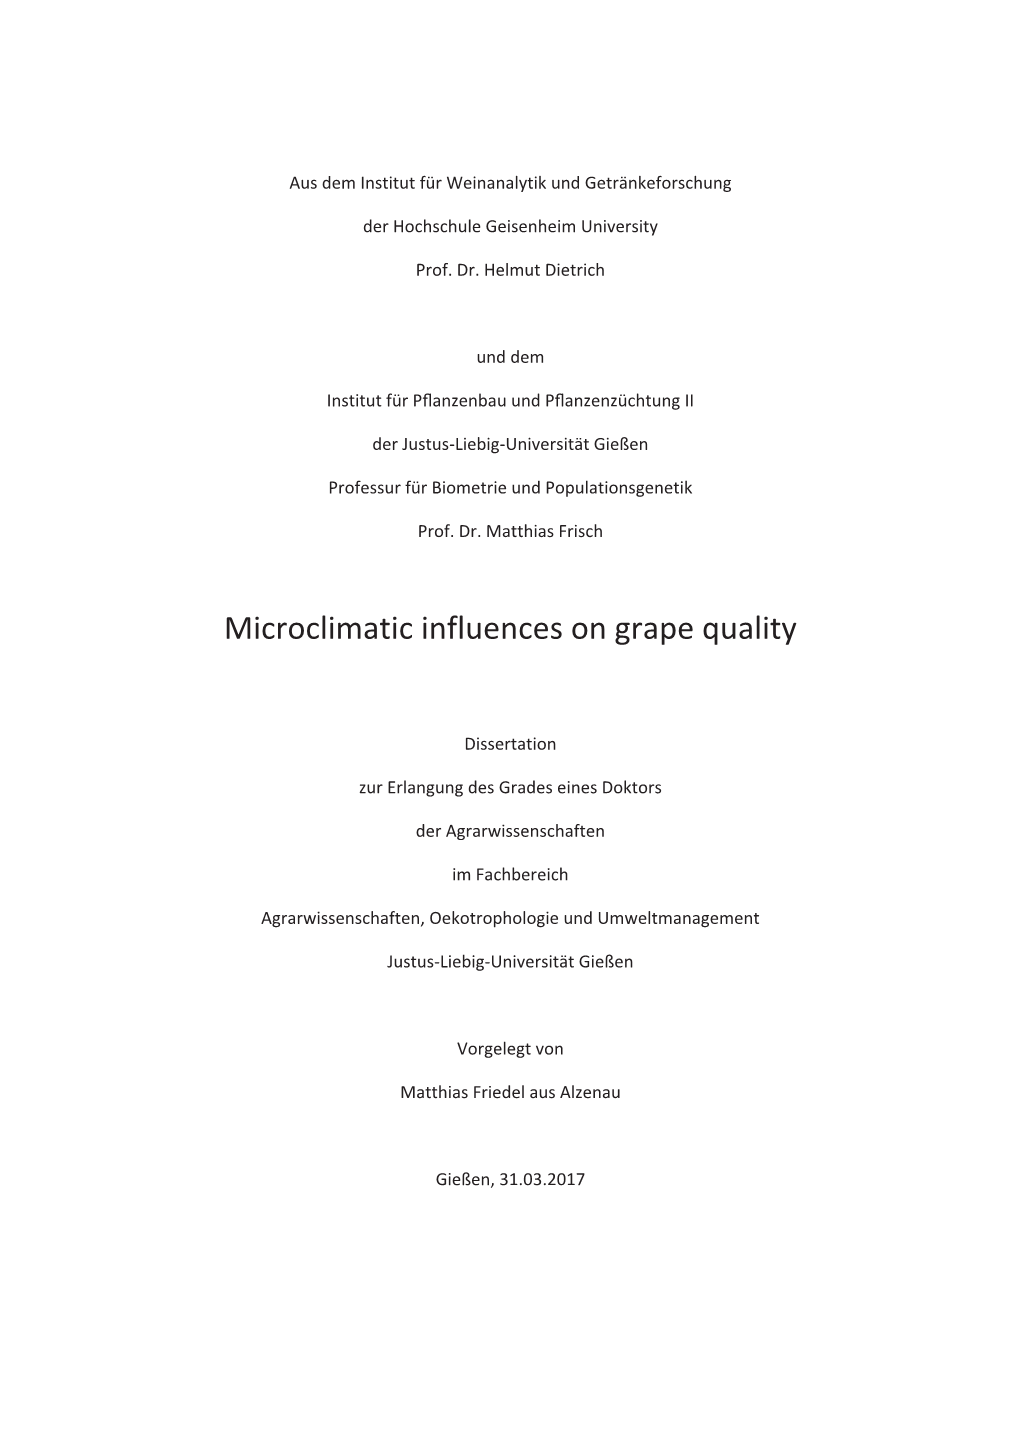 Microclimatic Influences on Grape Quality